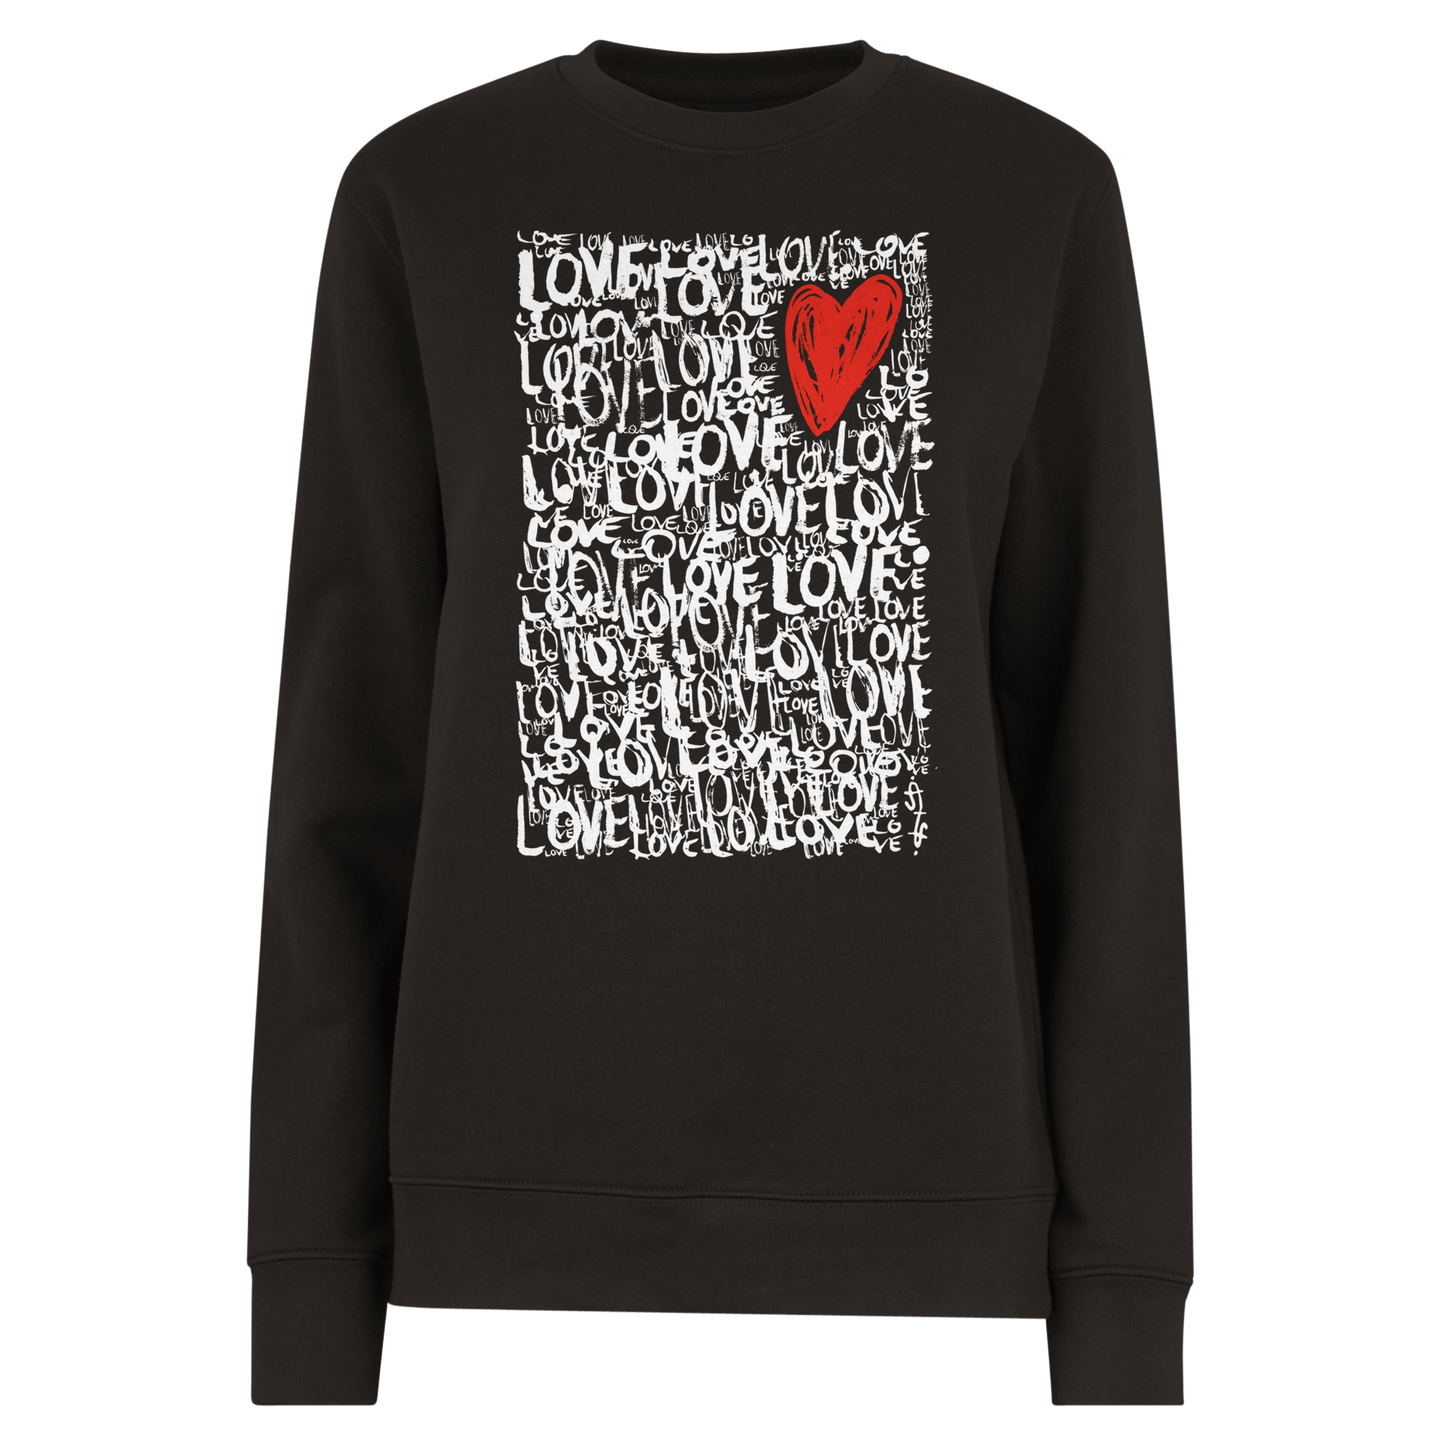 The Love - Organic Unisex Crewneck Sweatshirt apparel XS